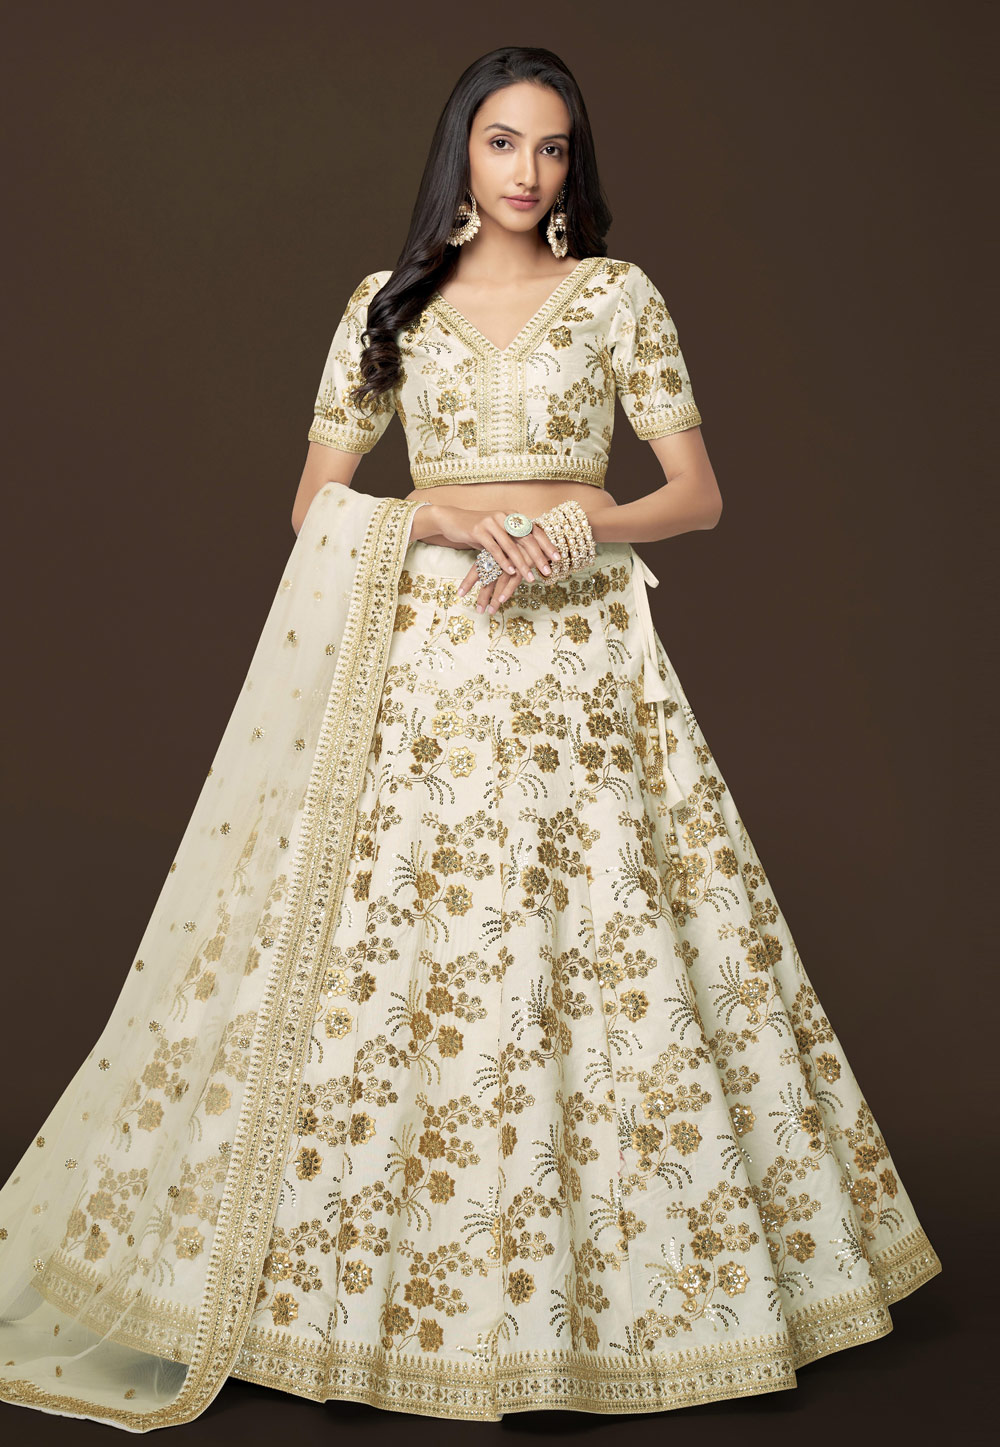 Photo of White and gold lehenga | Indian lehenga, Indian dresses, Indian  outfits